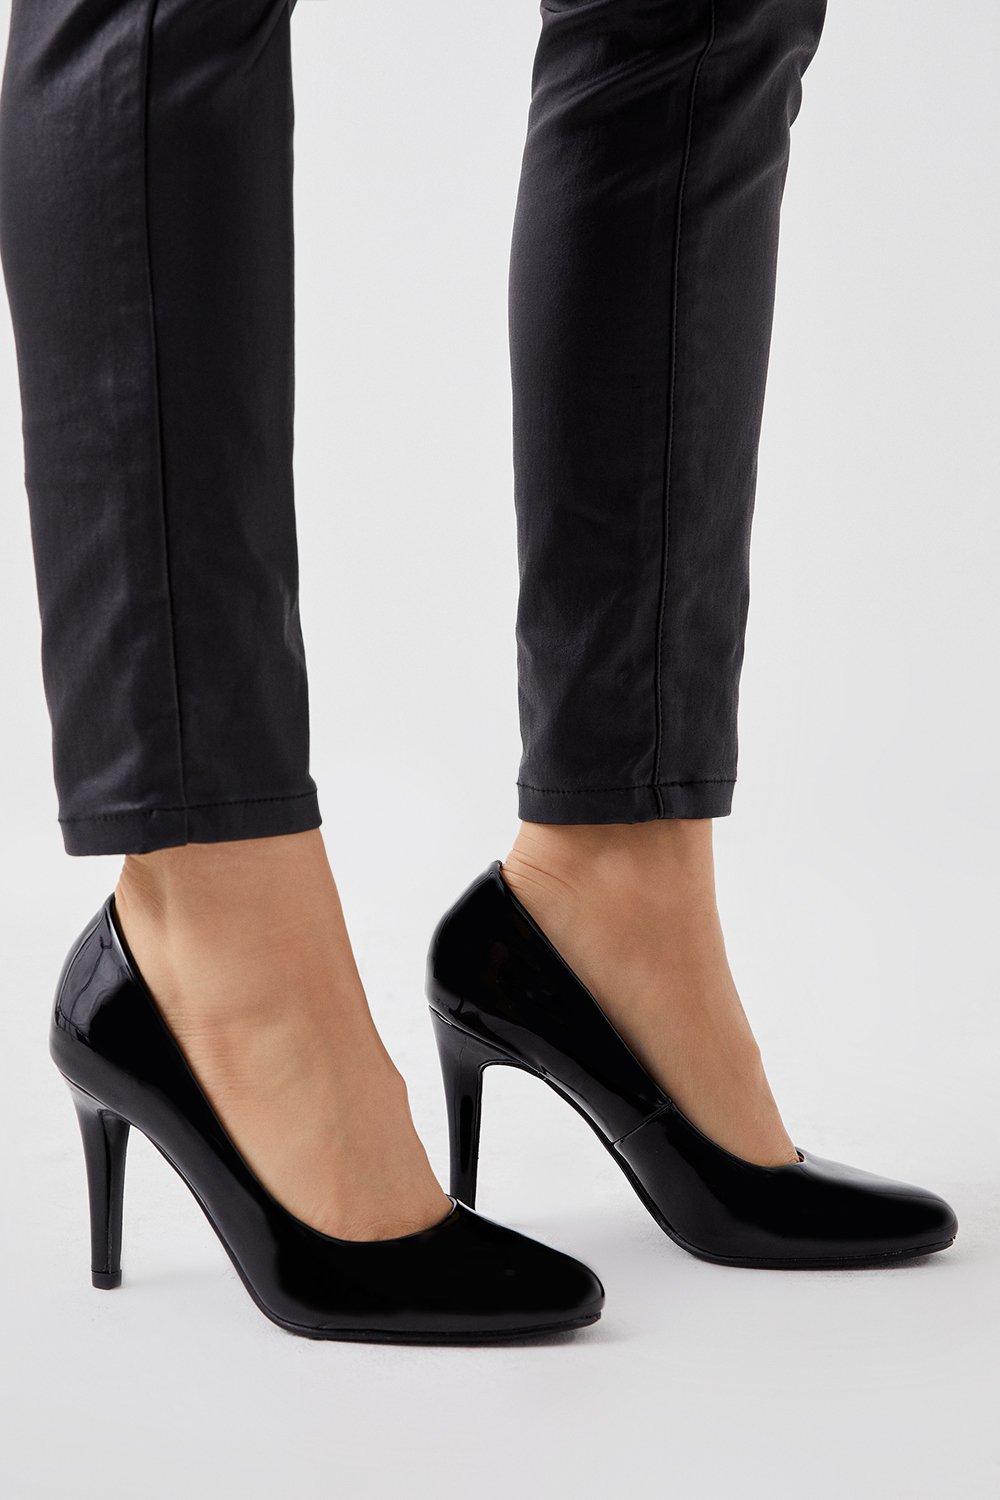 Women’s Dana Round Toe Stiletto Court Shoes - true black - 8